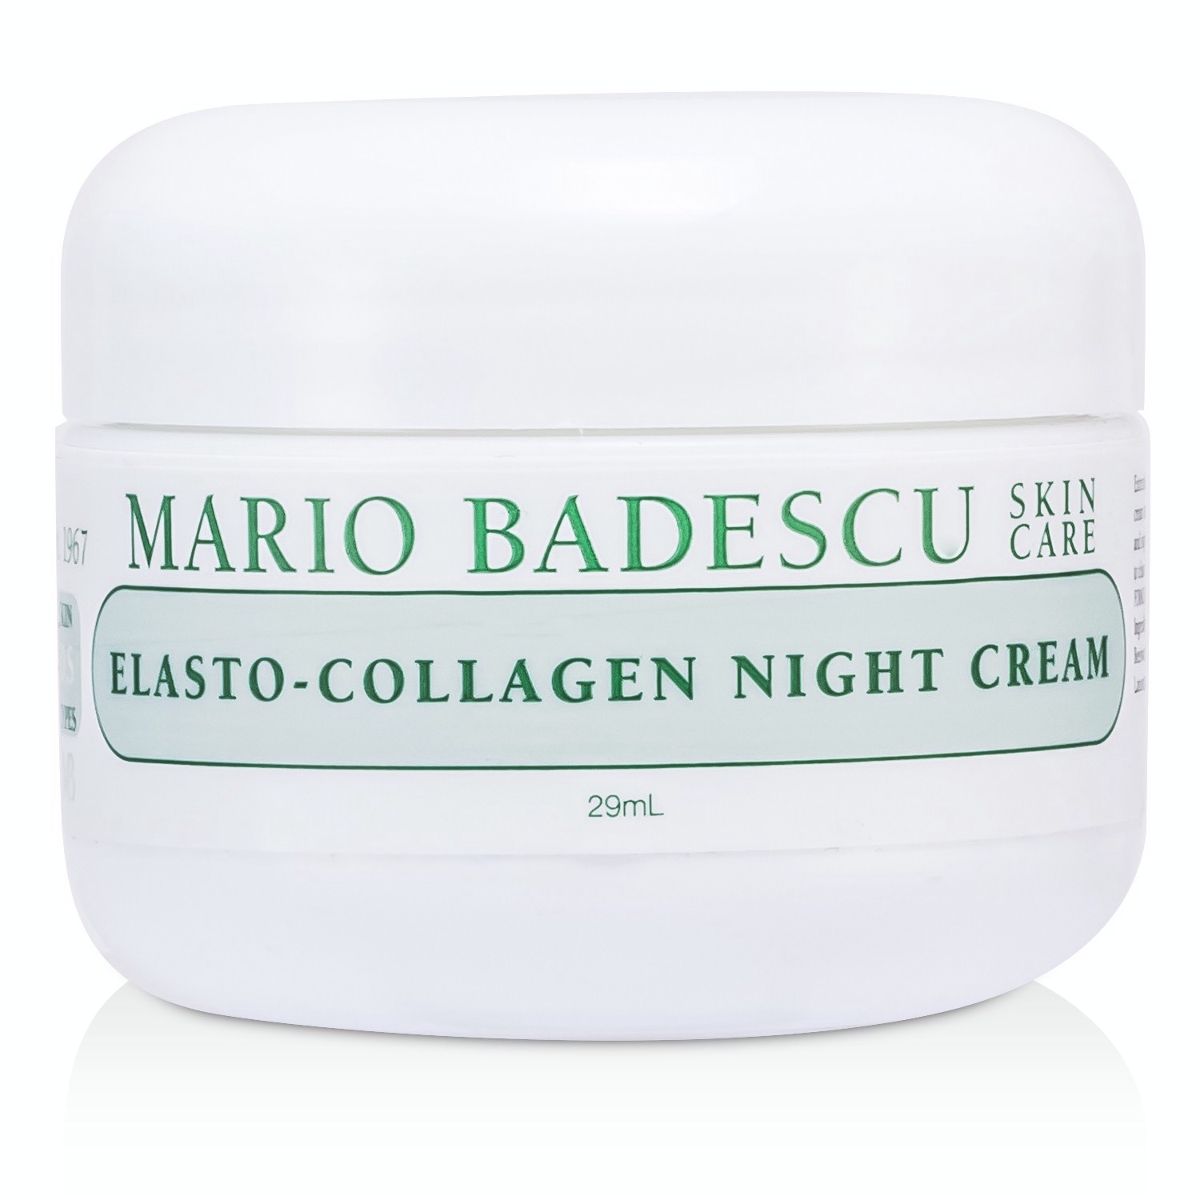 Elasto-Collagen Night Cream - For Dry/ Sensitive Skin Types Mario Badescu Image